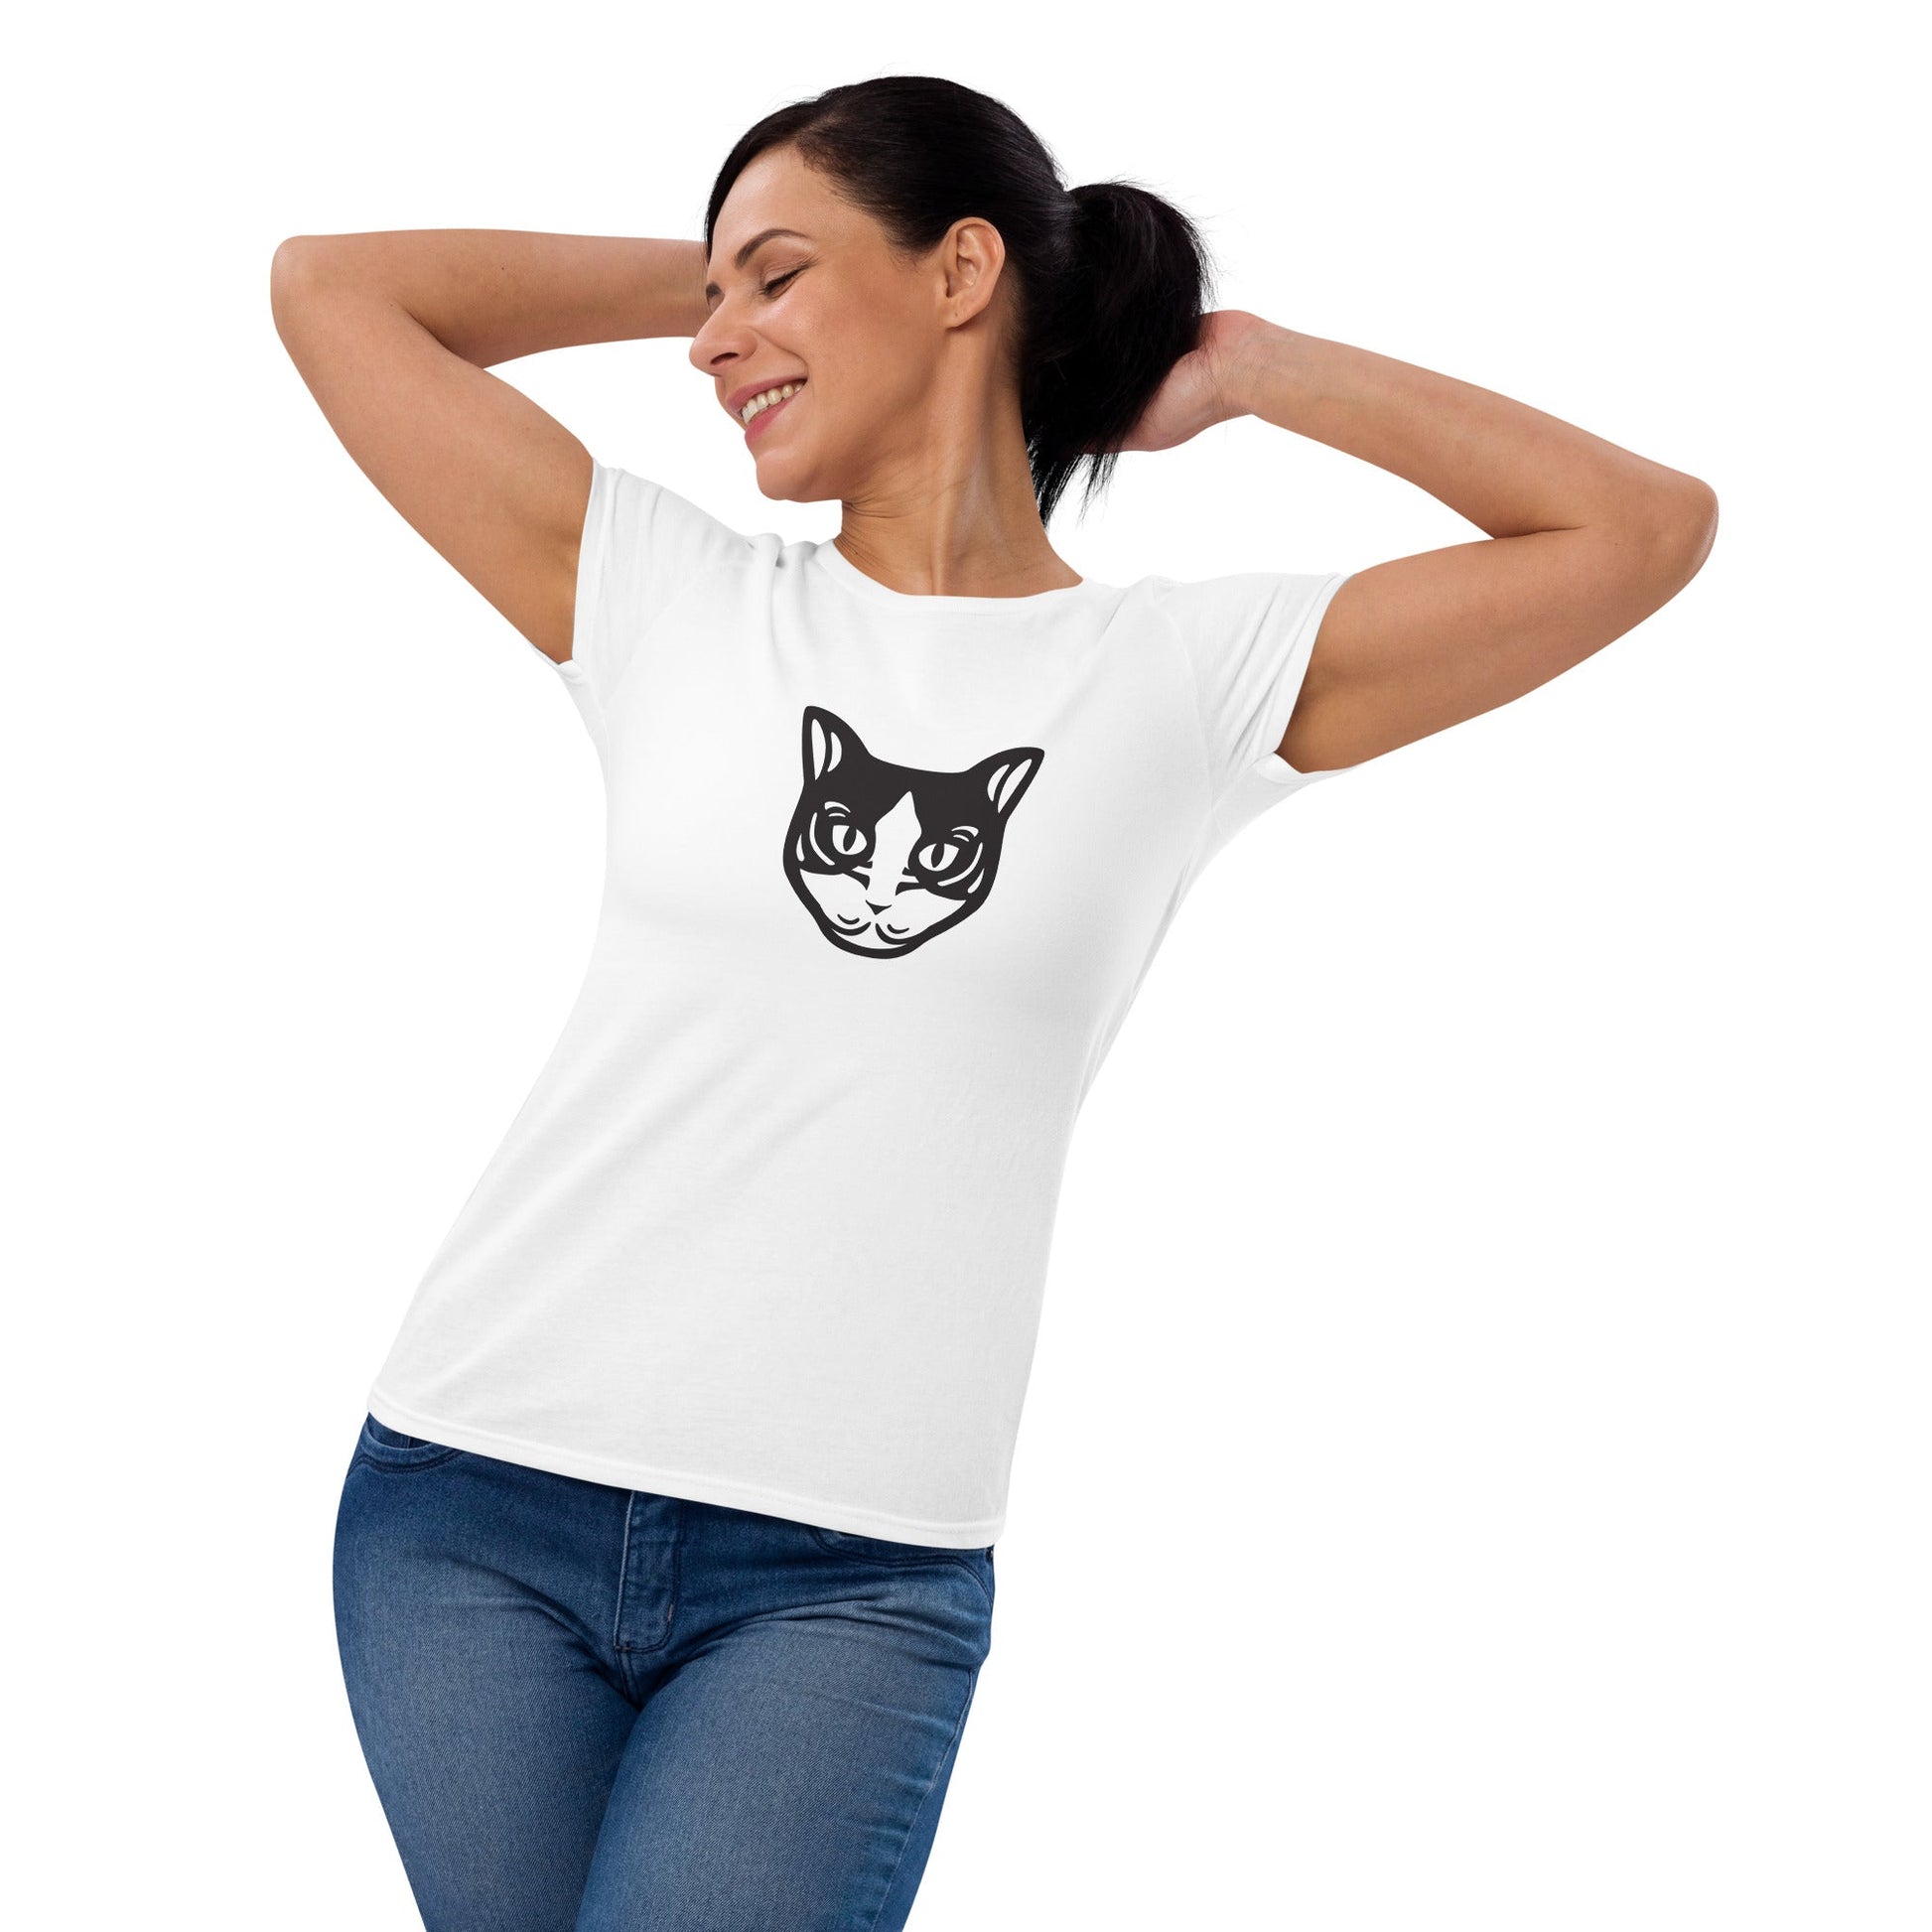 Camiseta feminina de manga curta - Gato preto e branco - Cores Claras i-animals